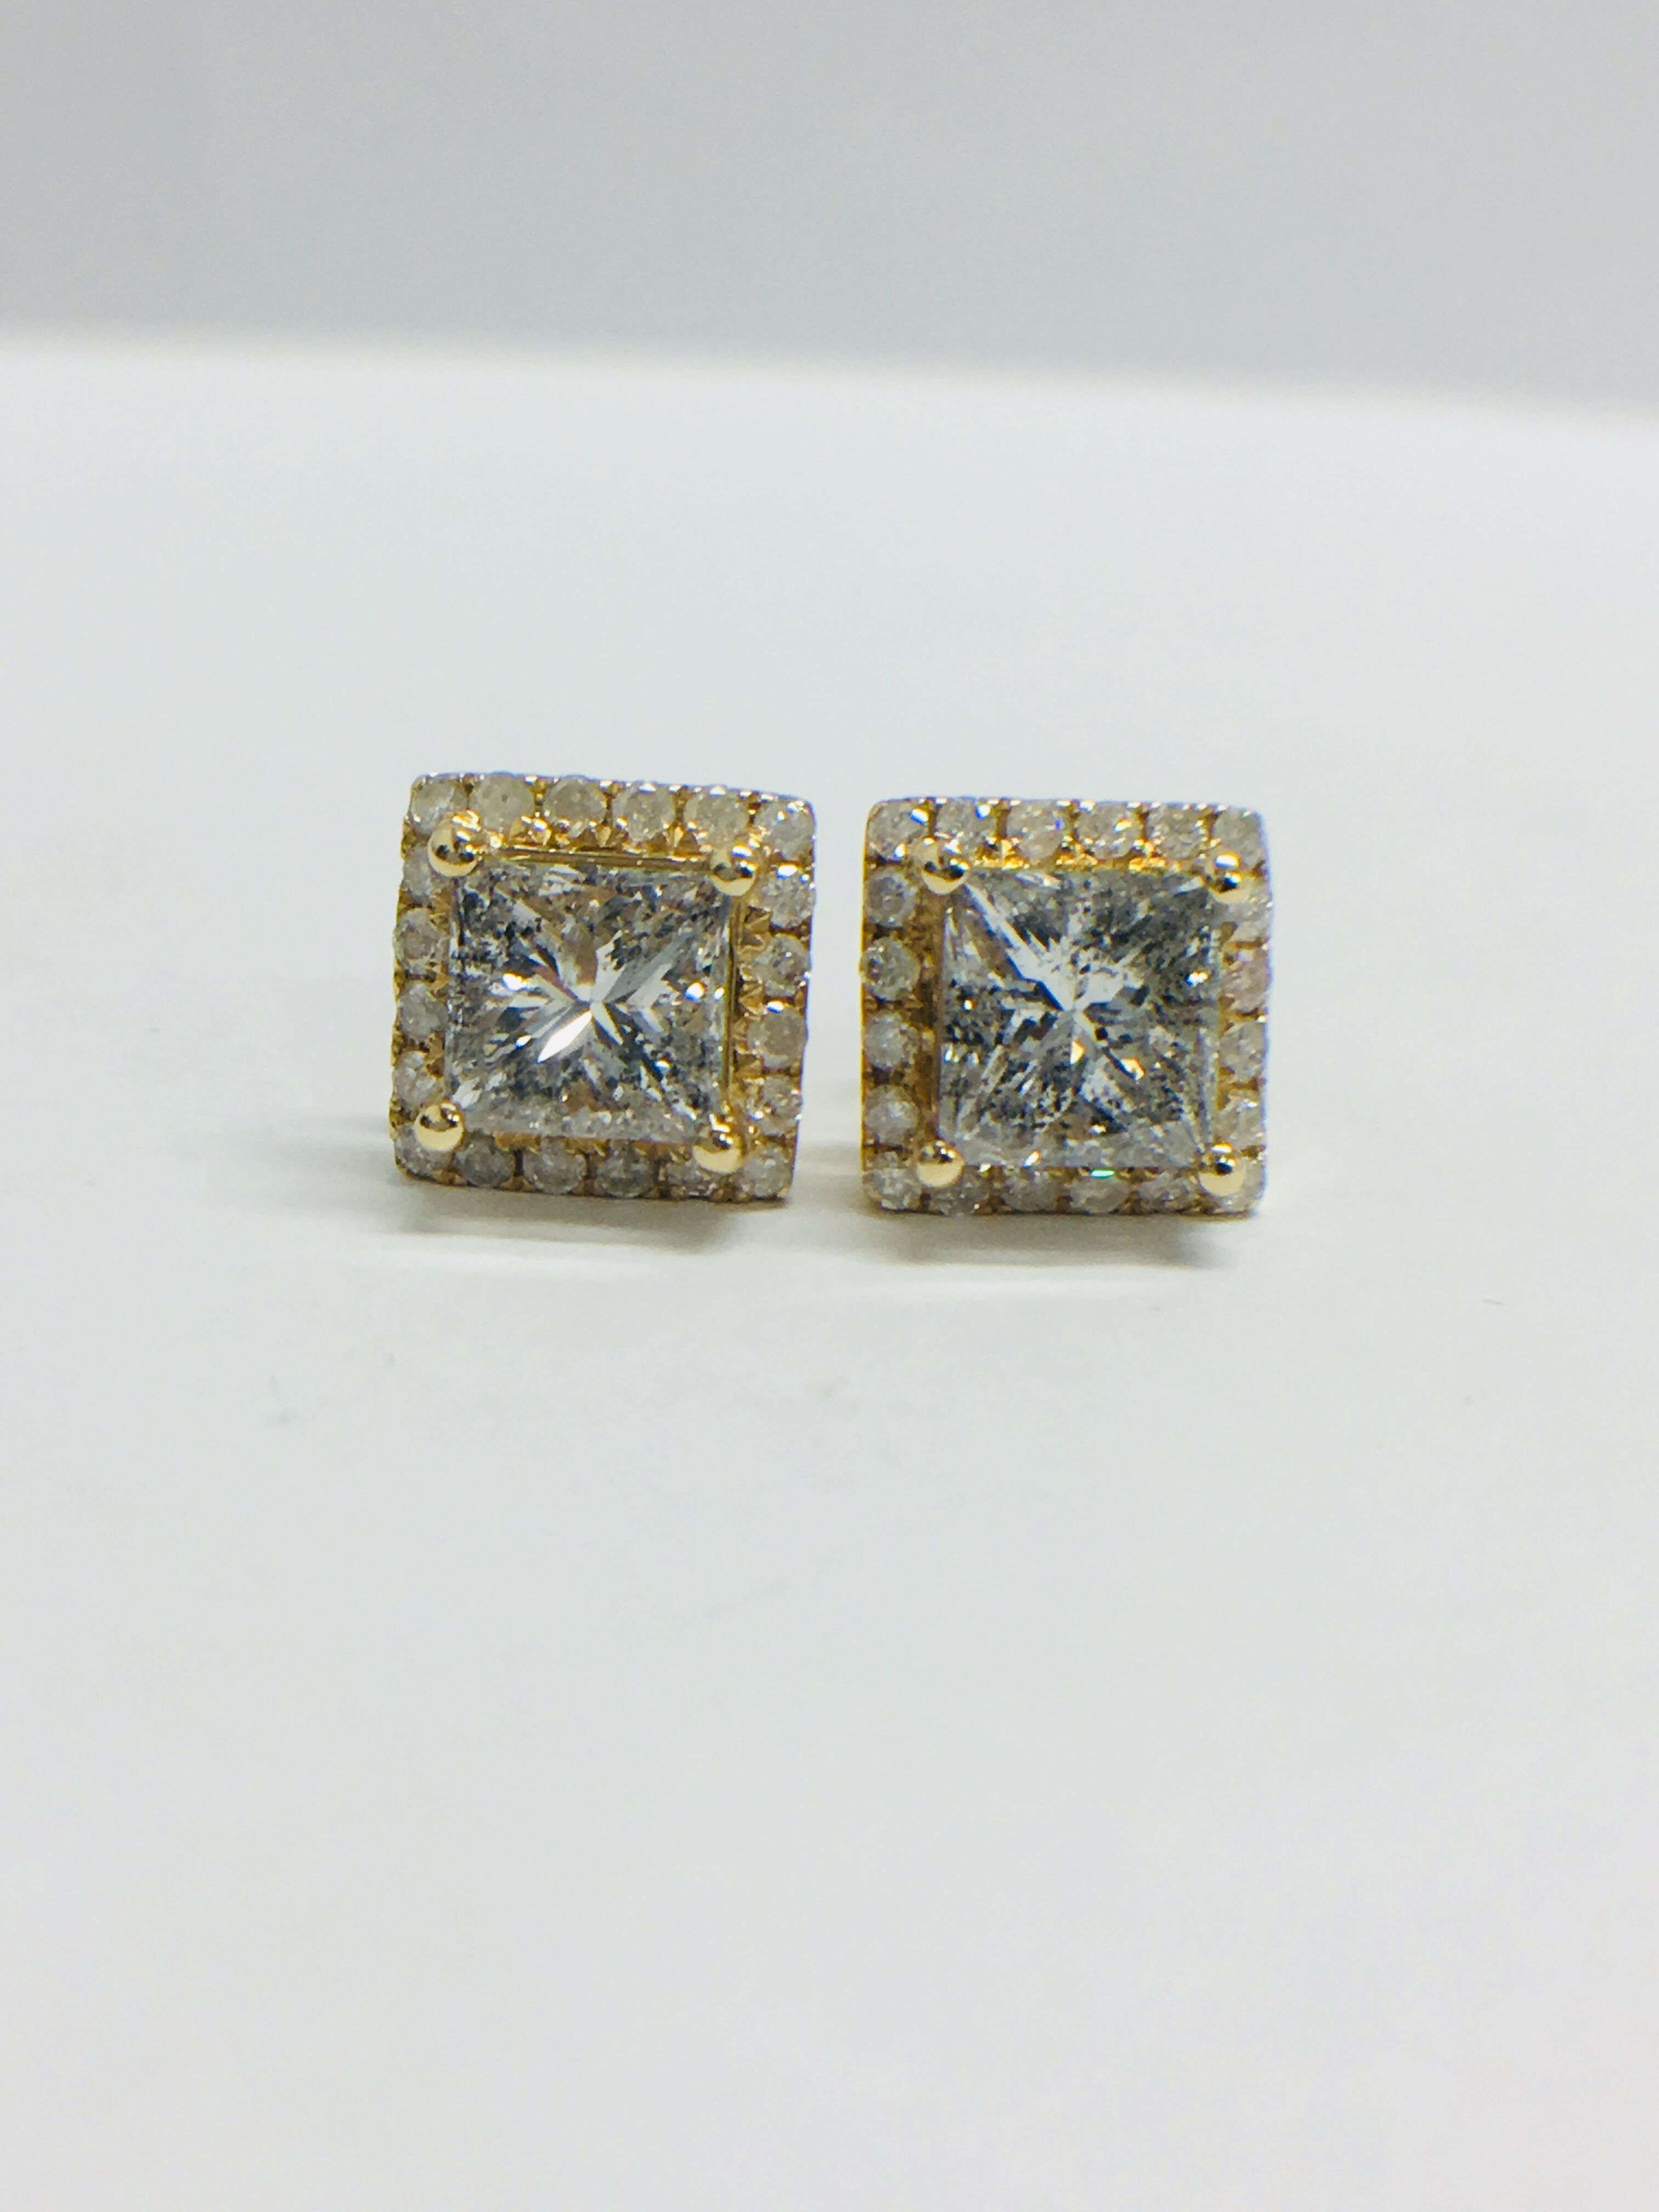 1 Pair 14Ct Yellow Gold Diamond Stud Earrings. - Image 2 of 8